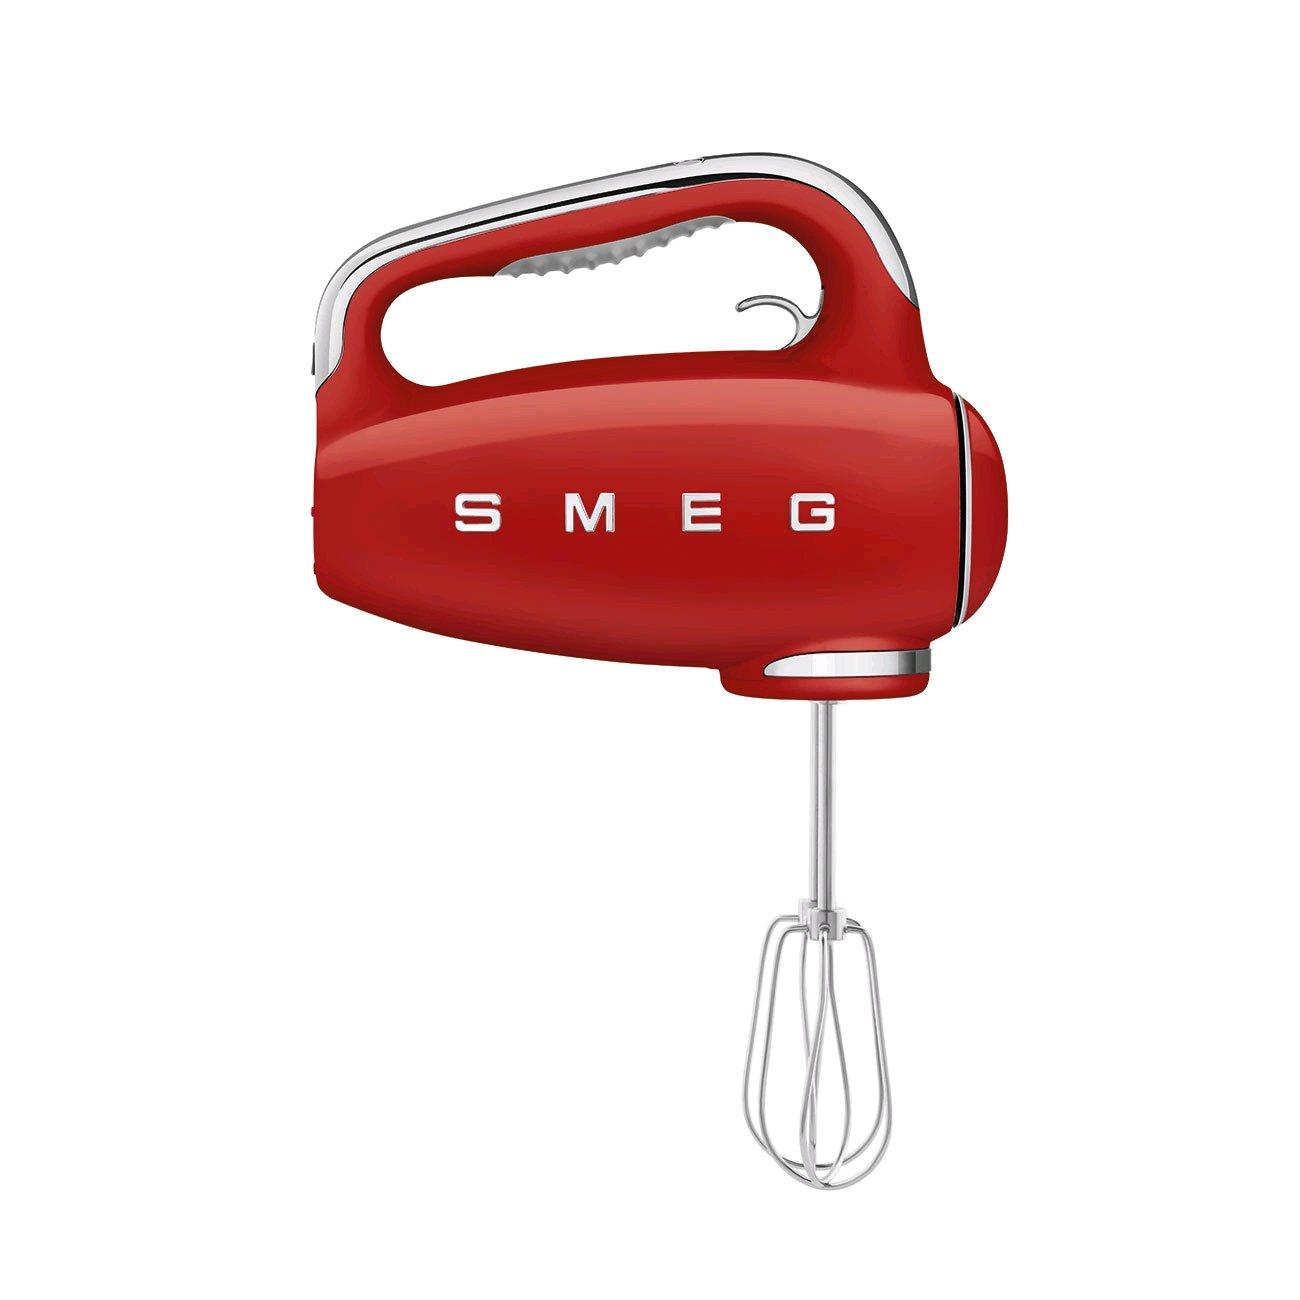 SMEG 50's Style Handmixer  